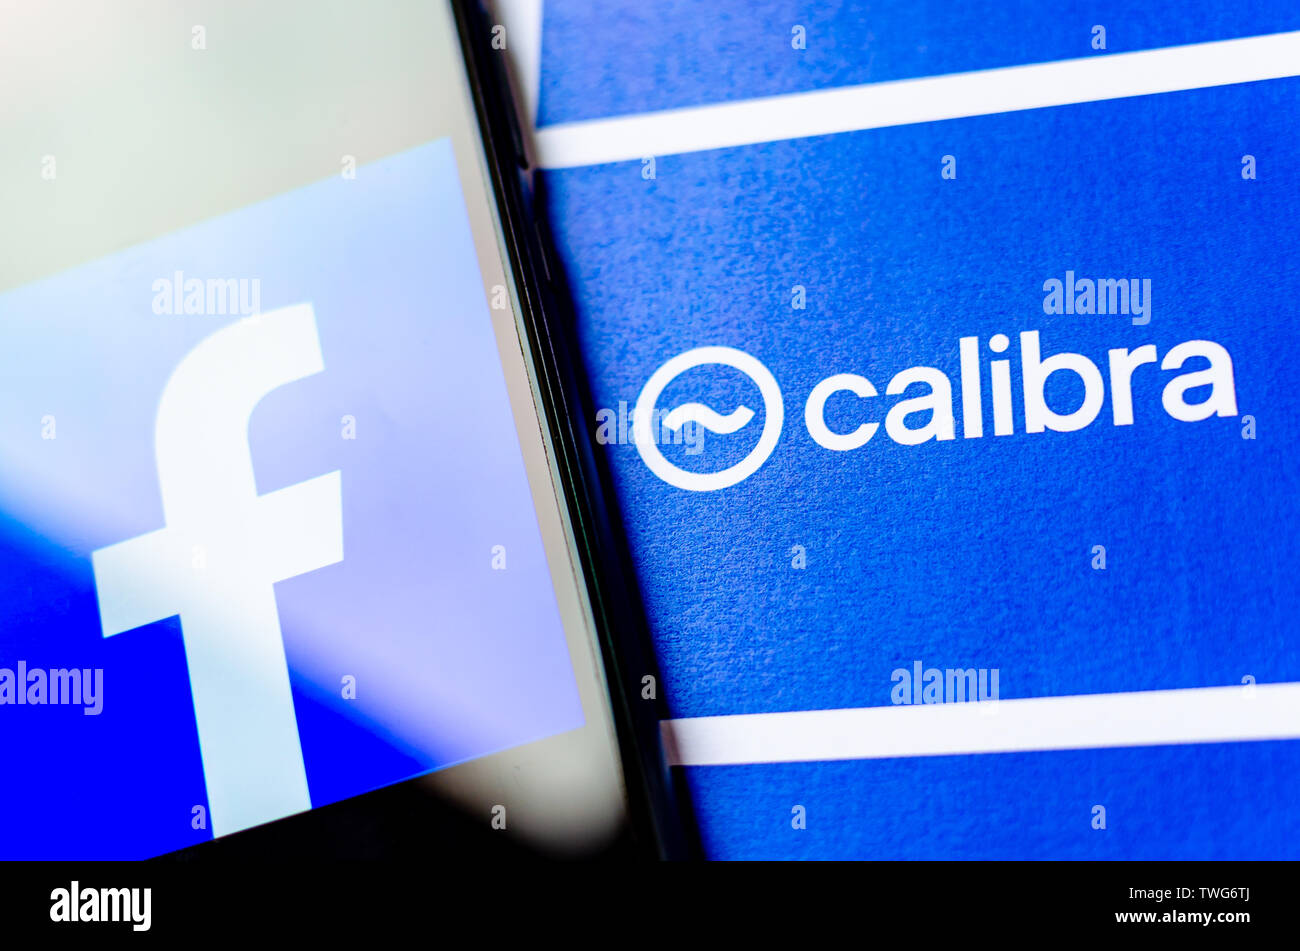 Facebook Calibra - new digital wallet for crypto coin Libra. Photo of smartphone with FB logo next to broshure with Calibra logo. Stock Photo